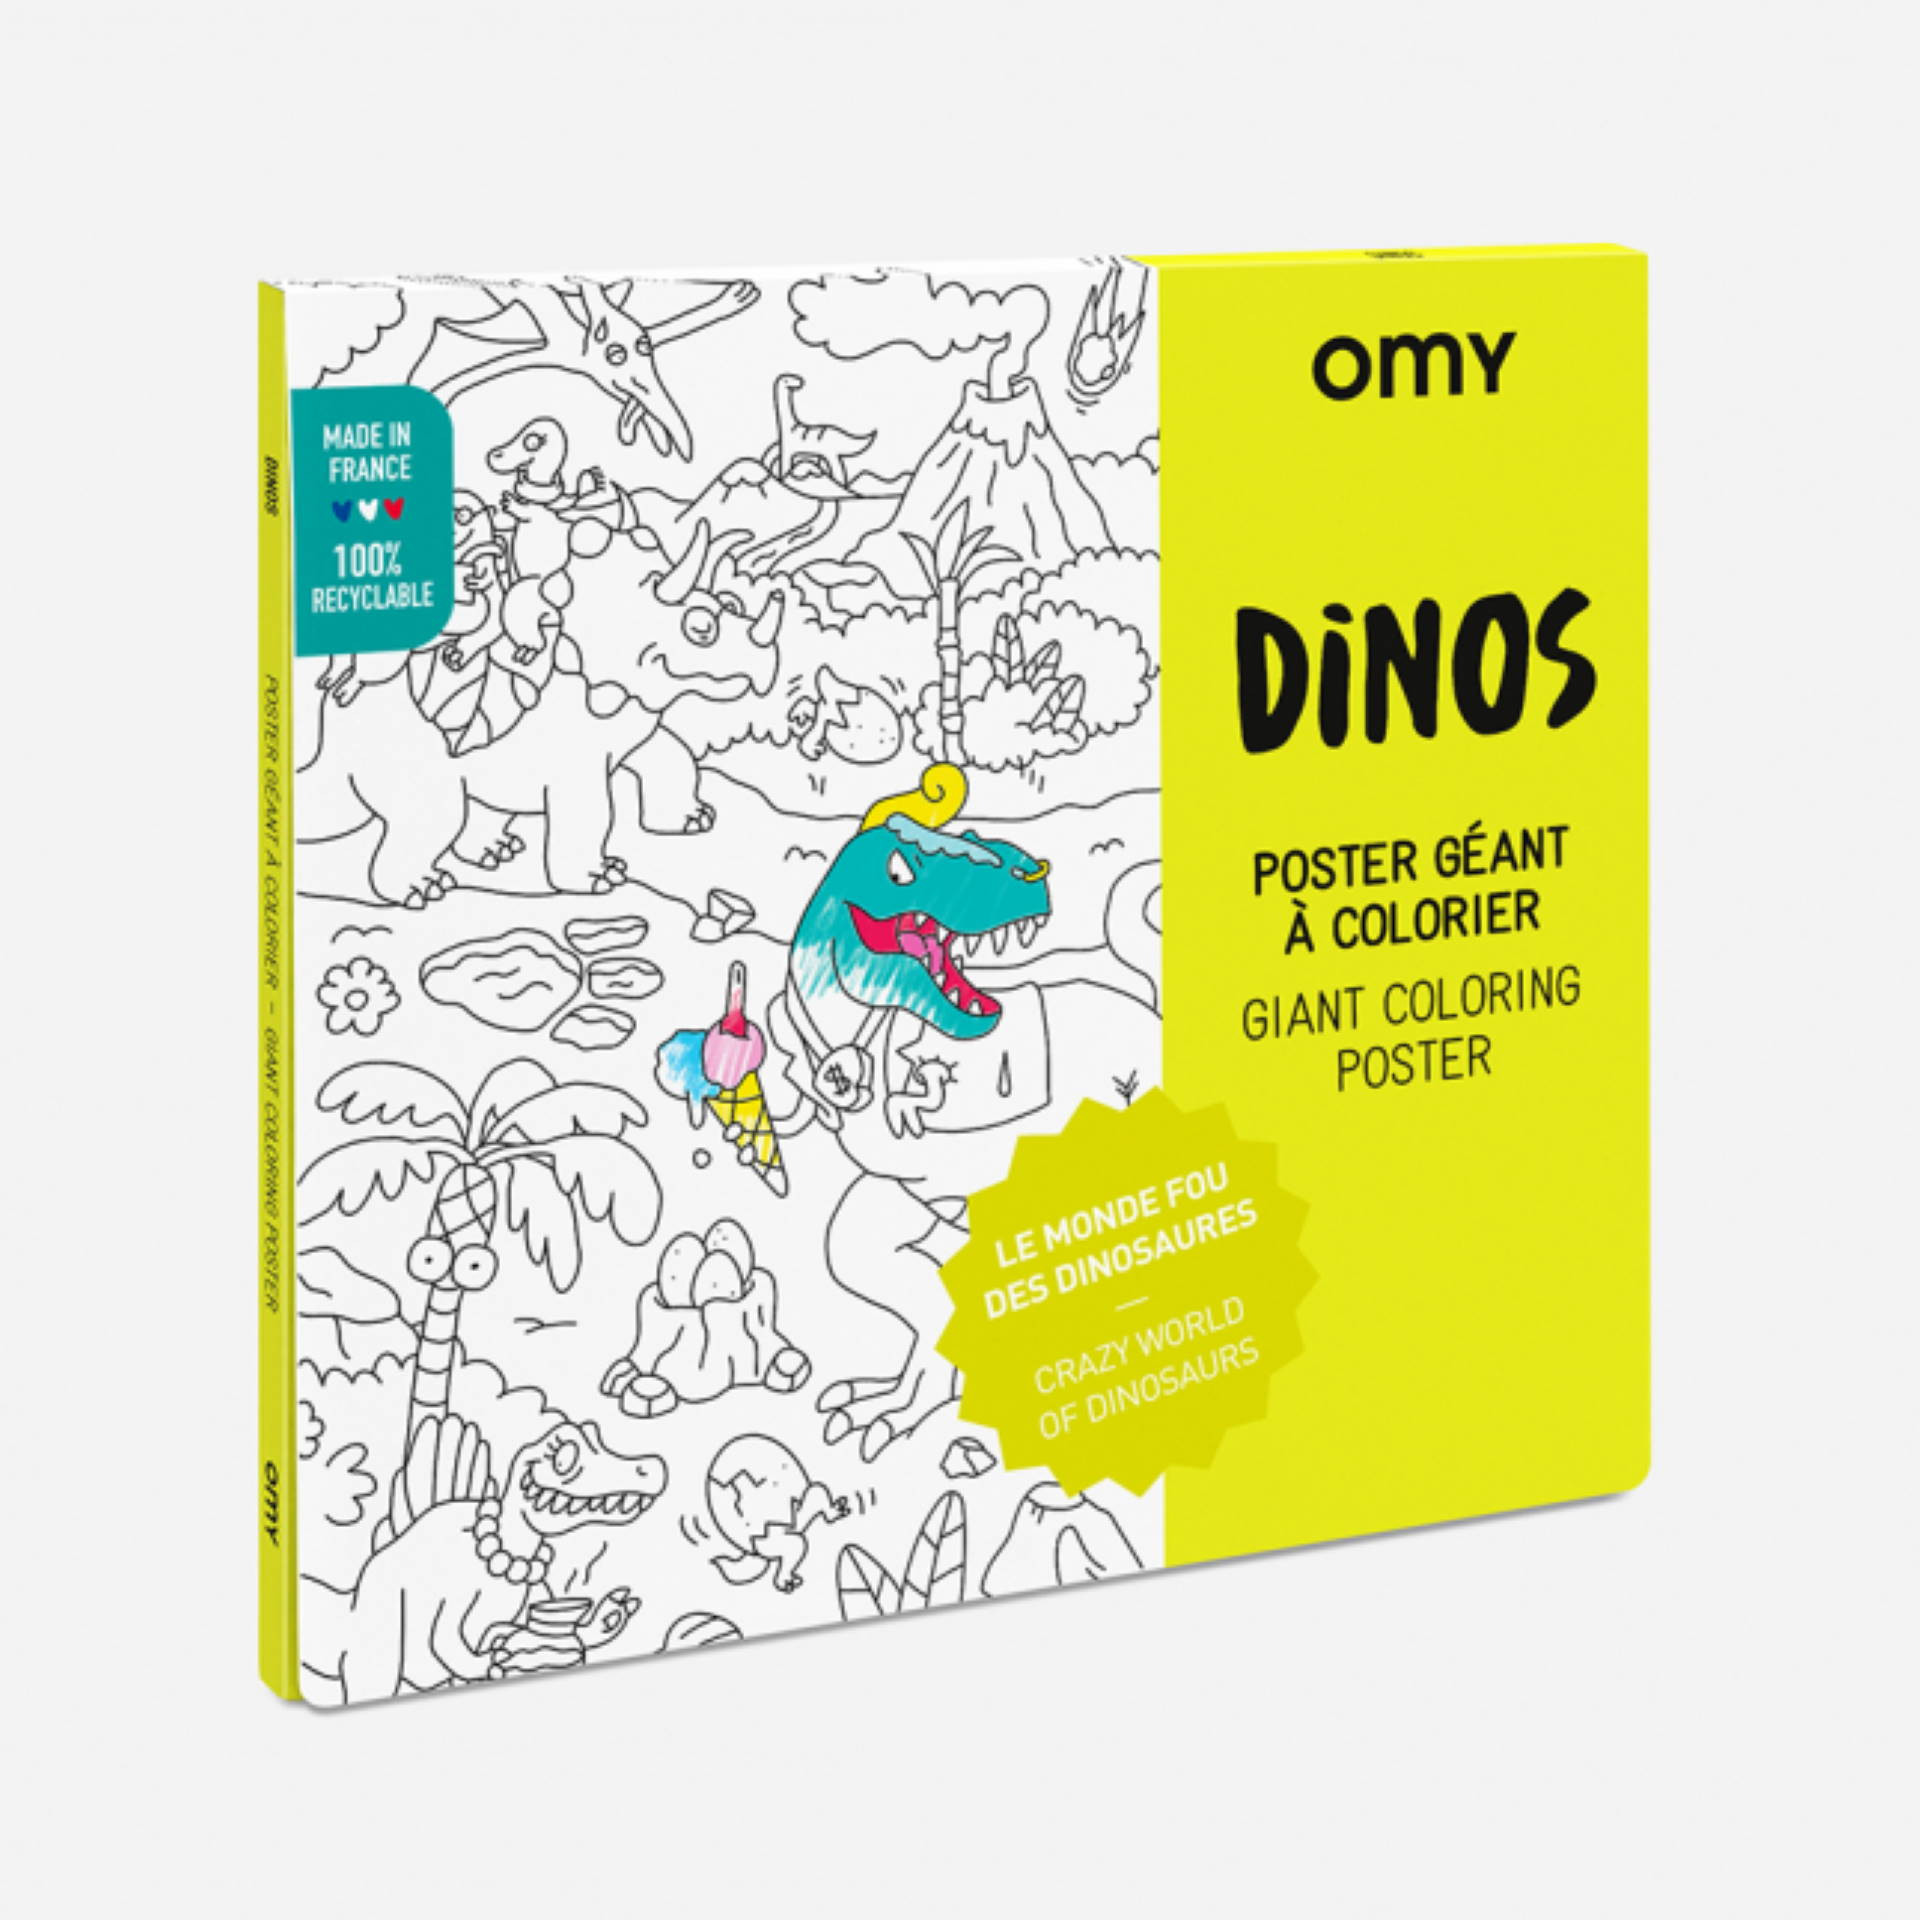 Gigantic Dinosaur coloring poster - OMY